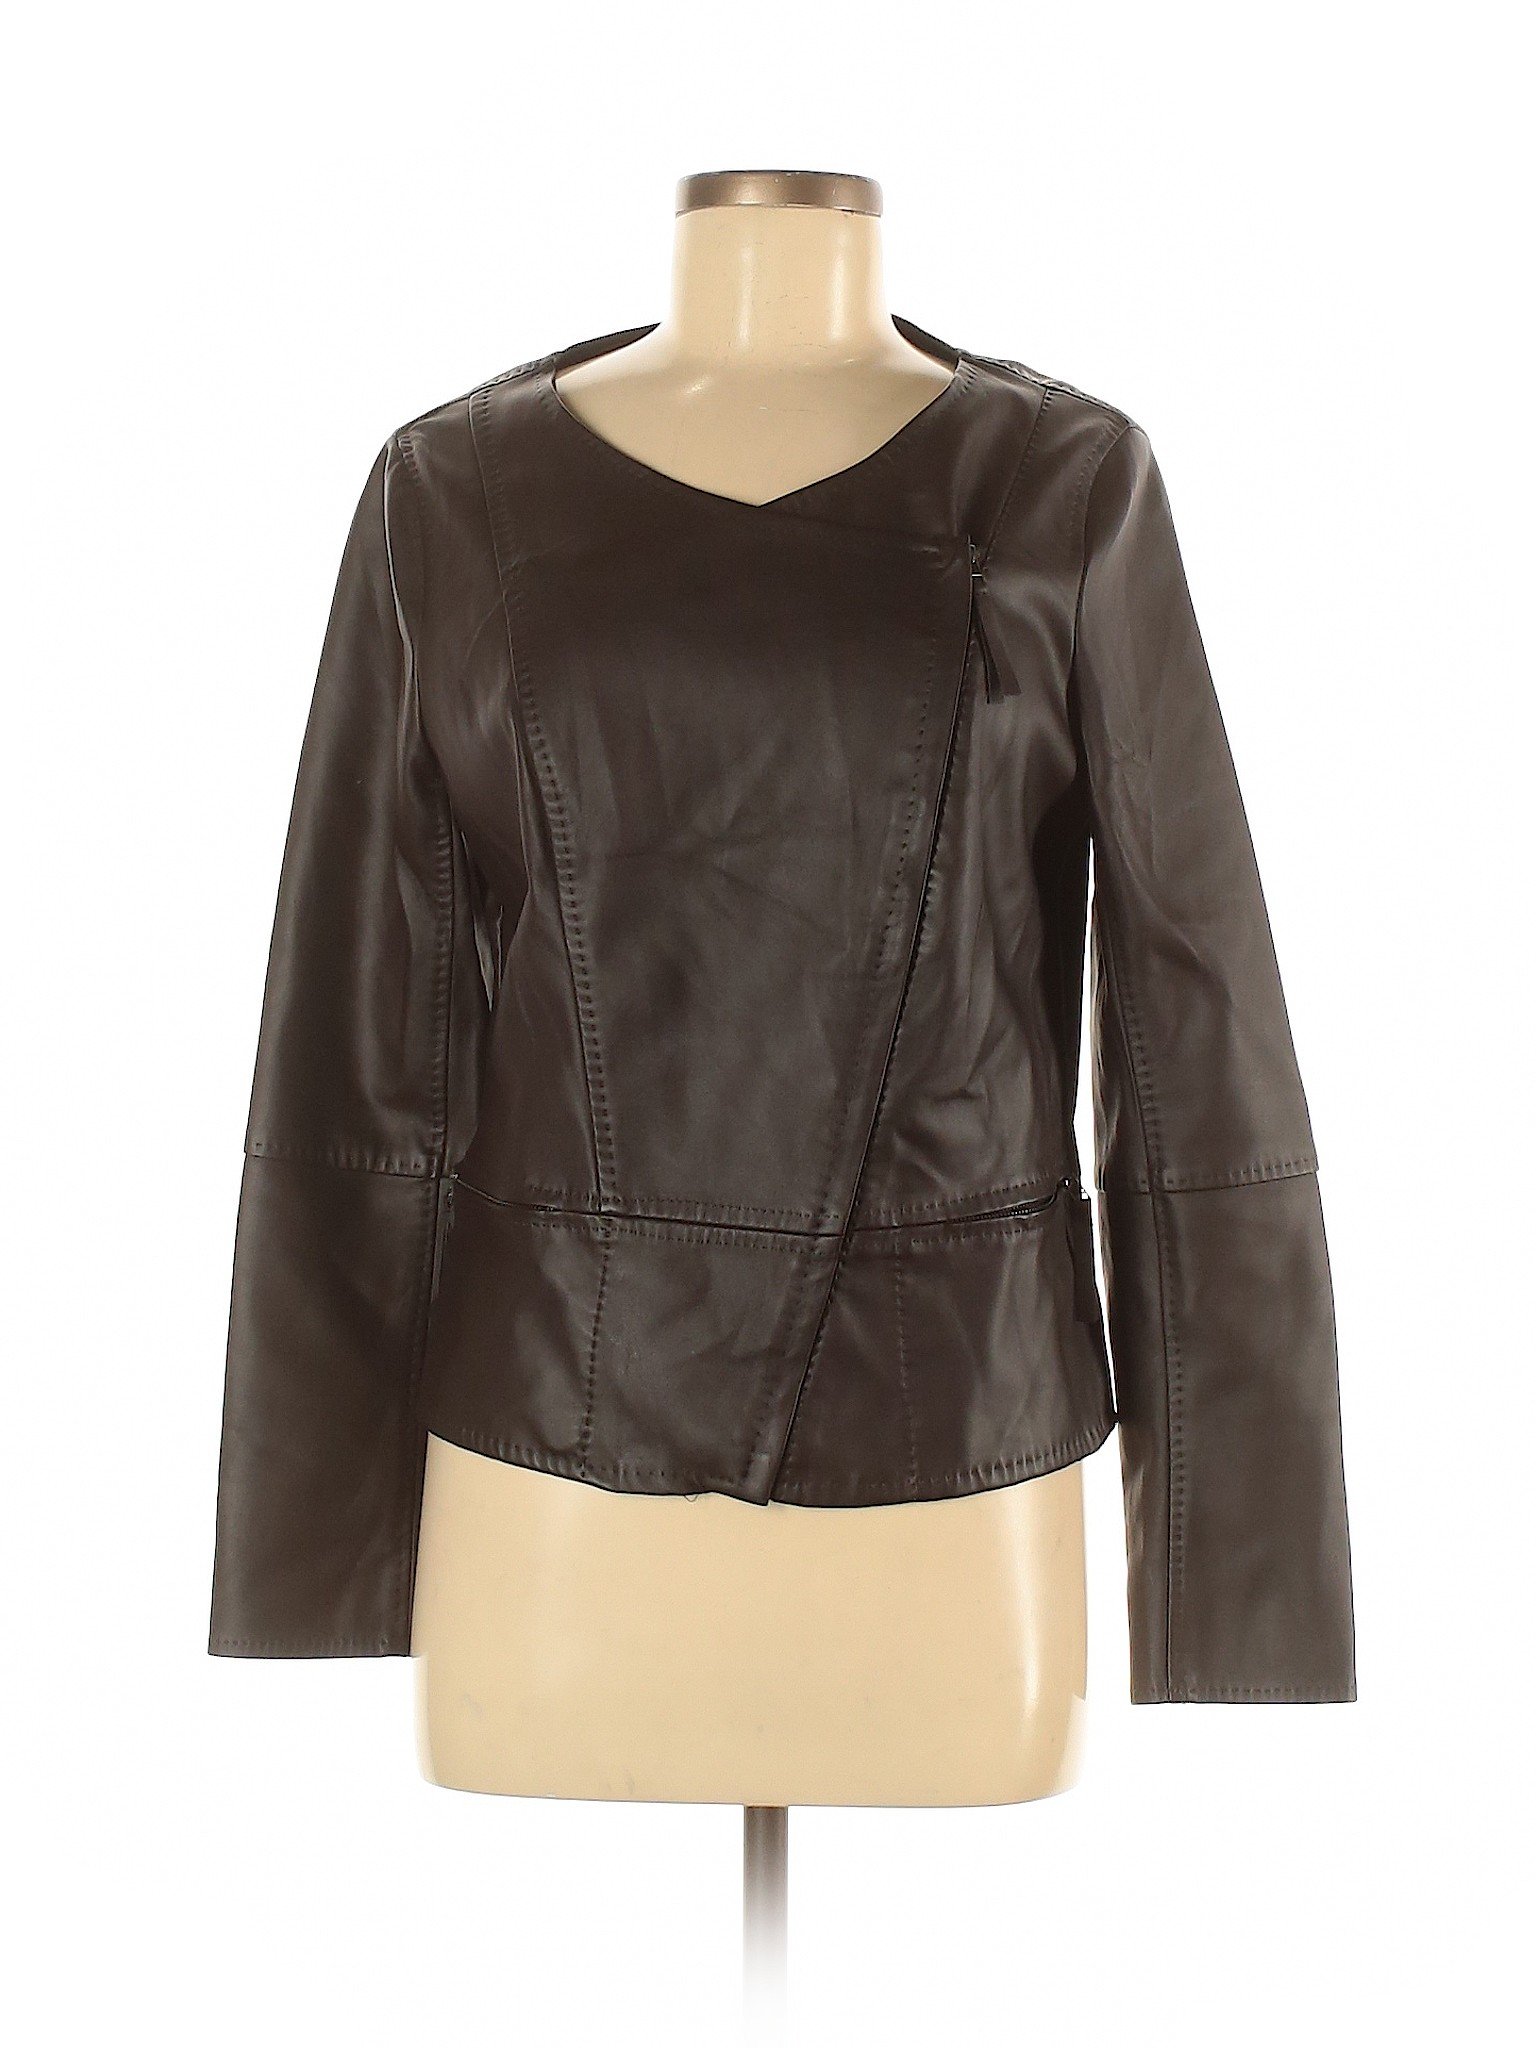 Max Studio Women Brown Faux Leather Jacket M | eBay